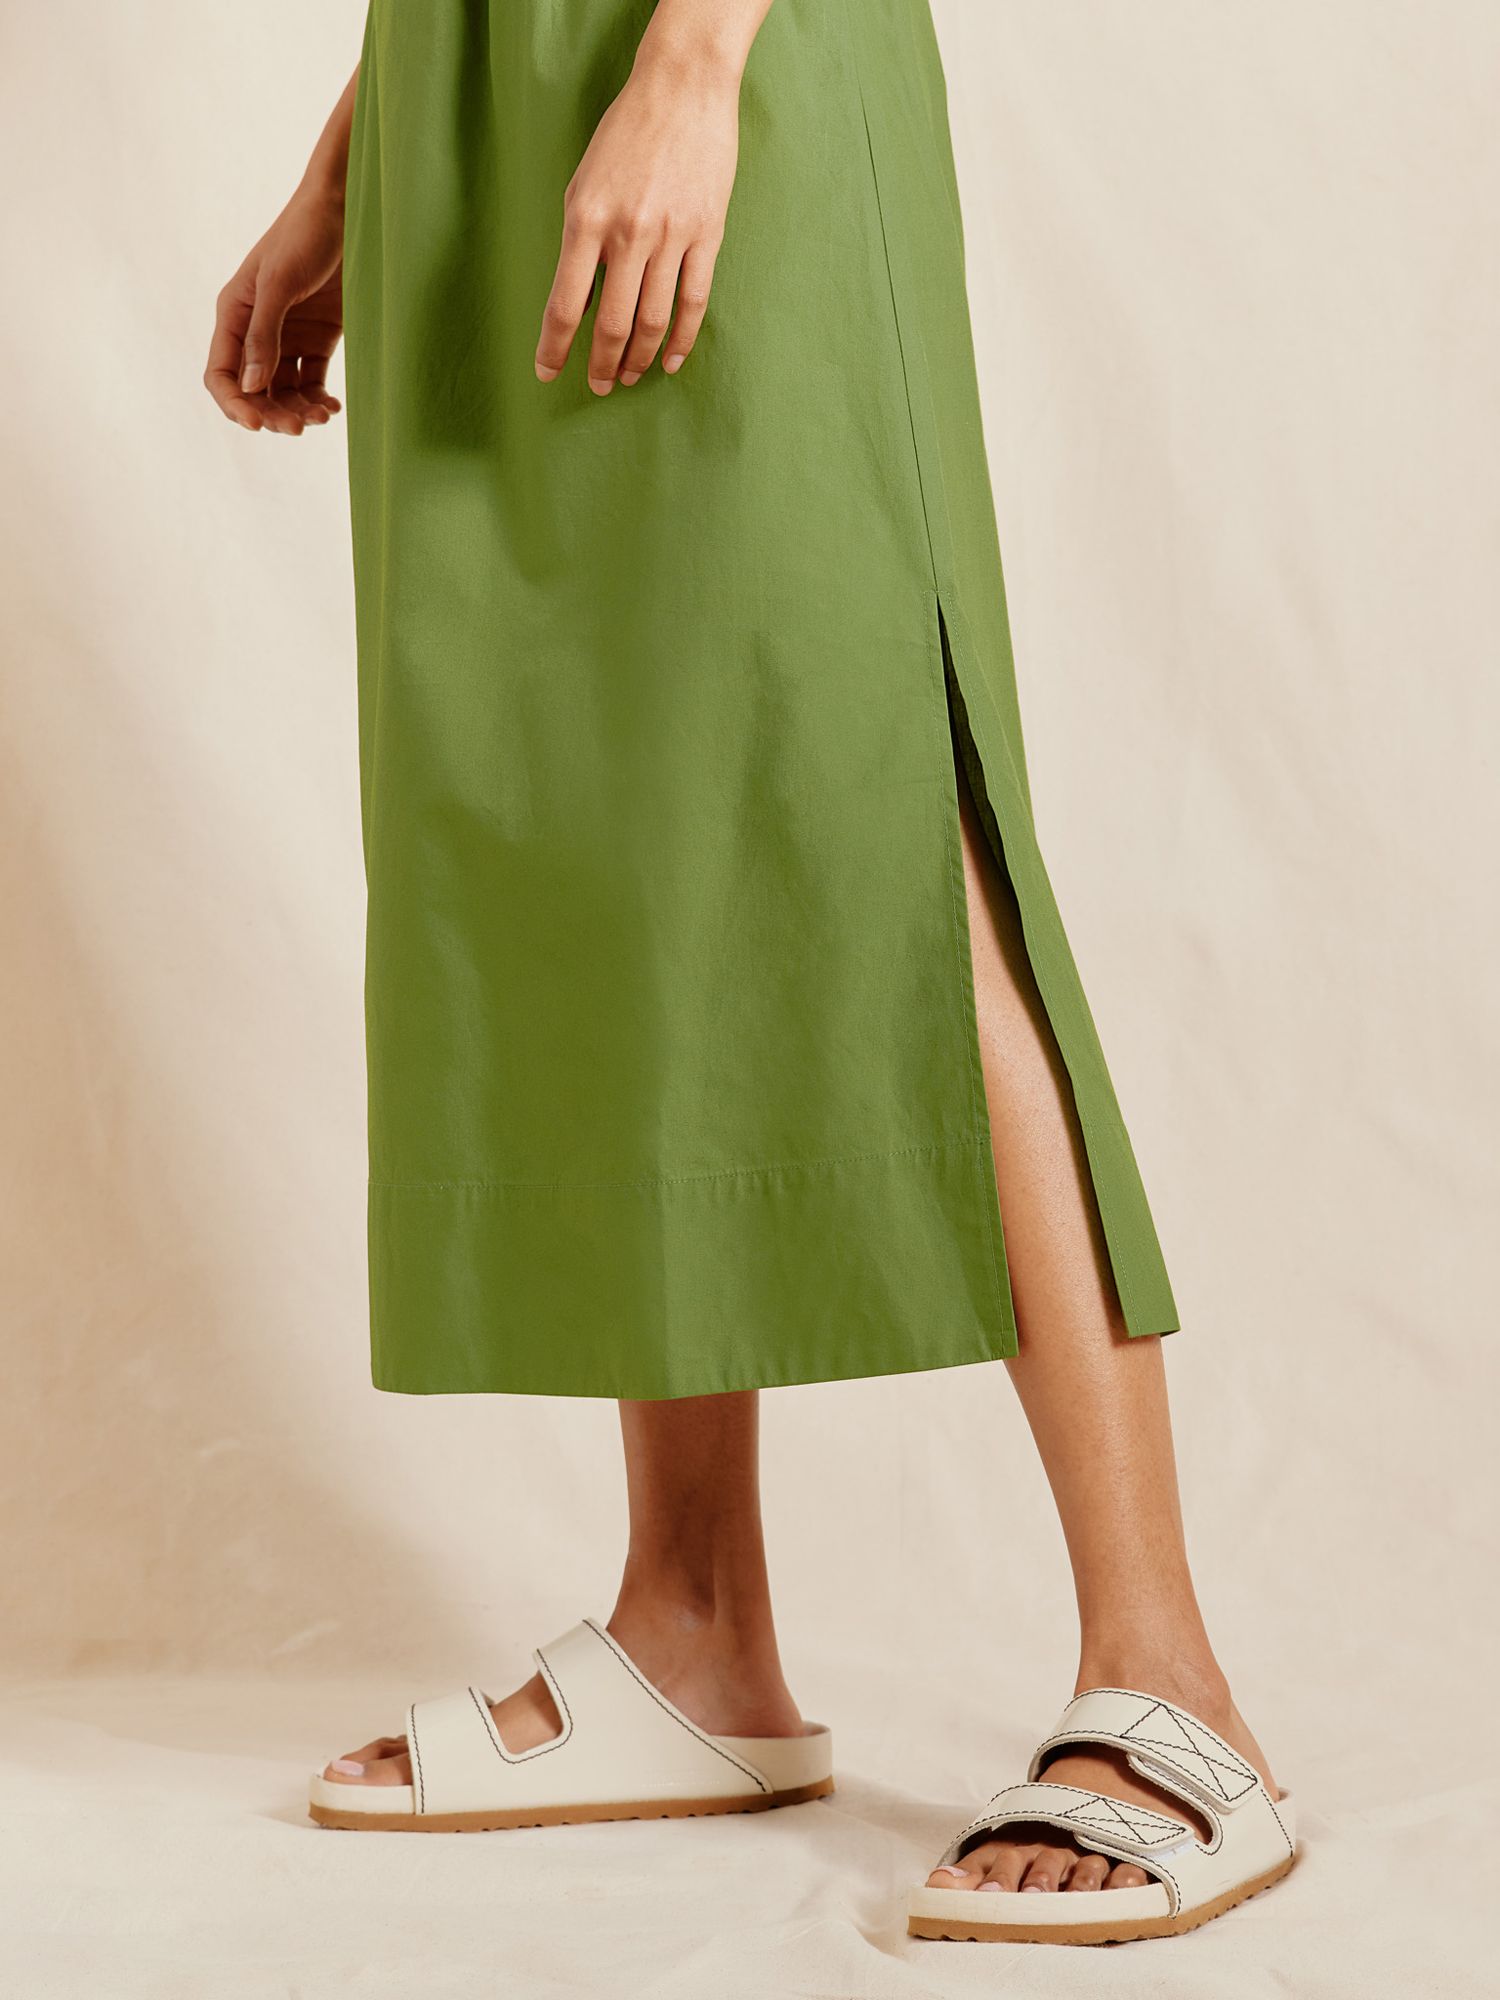 Albaray Organic Cotton Elastic Waist Dress, Green, 8